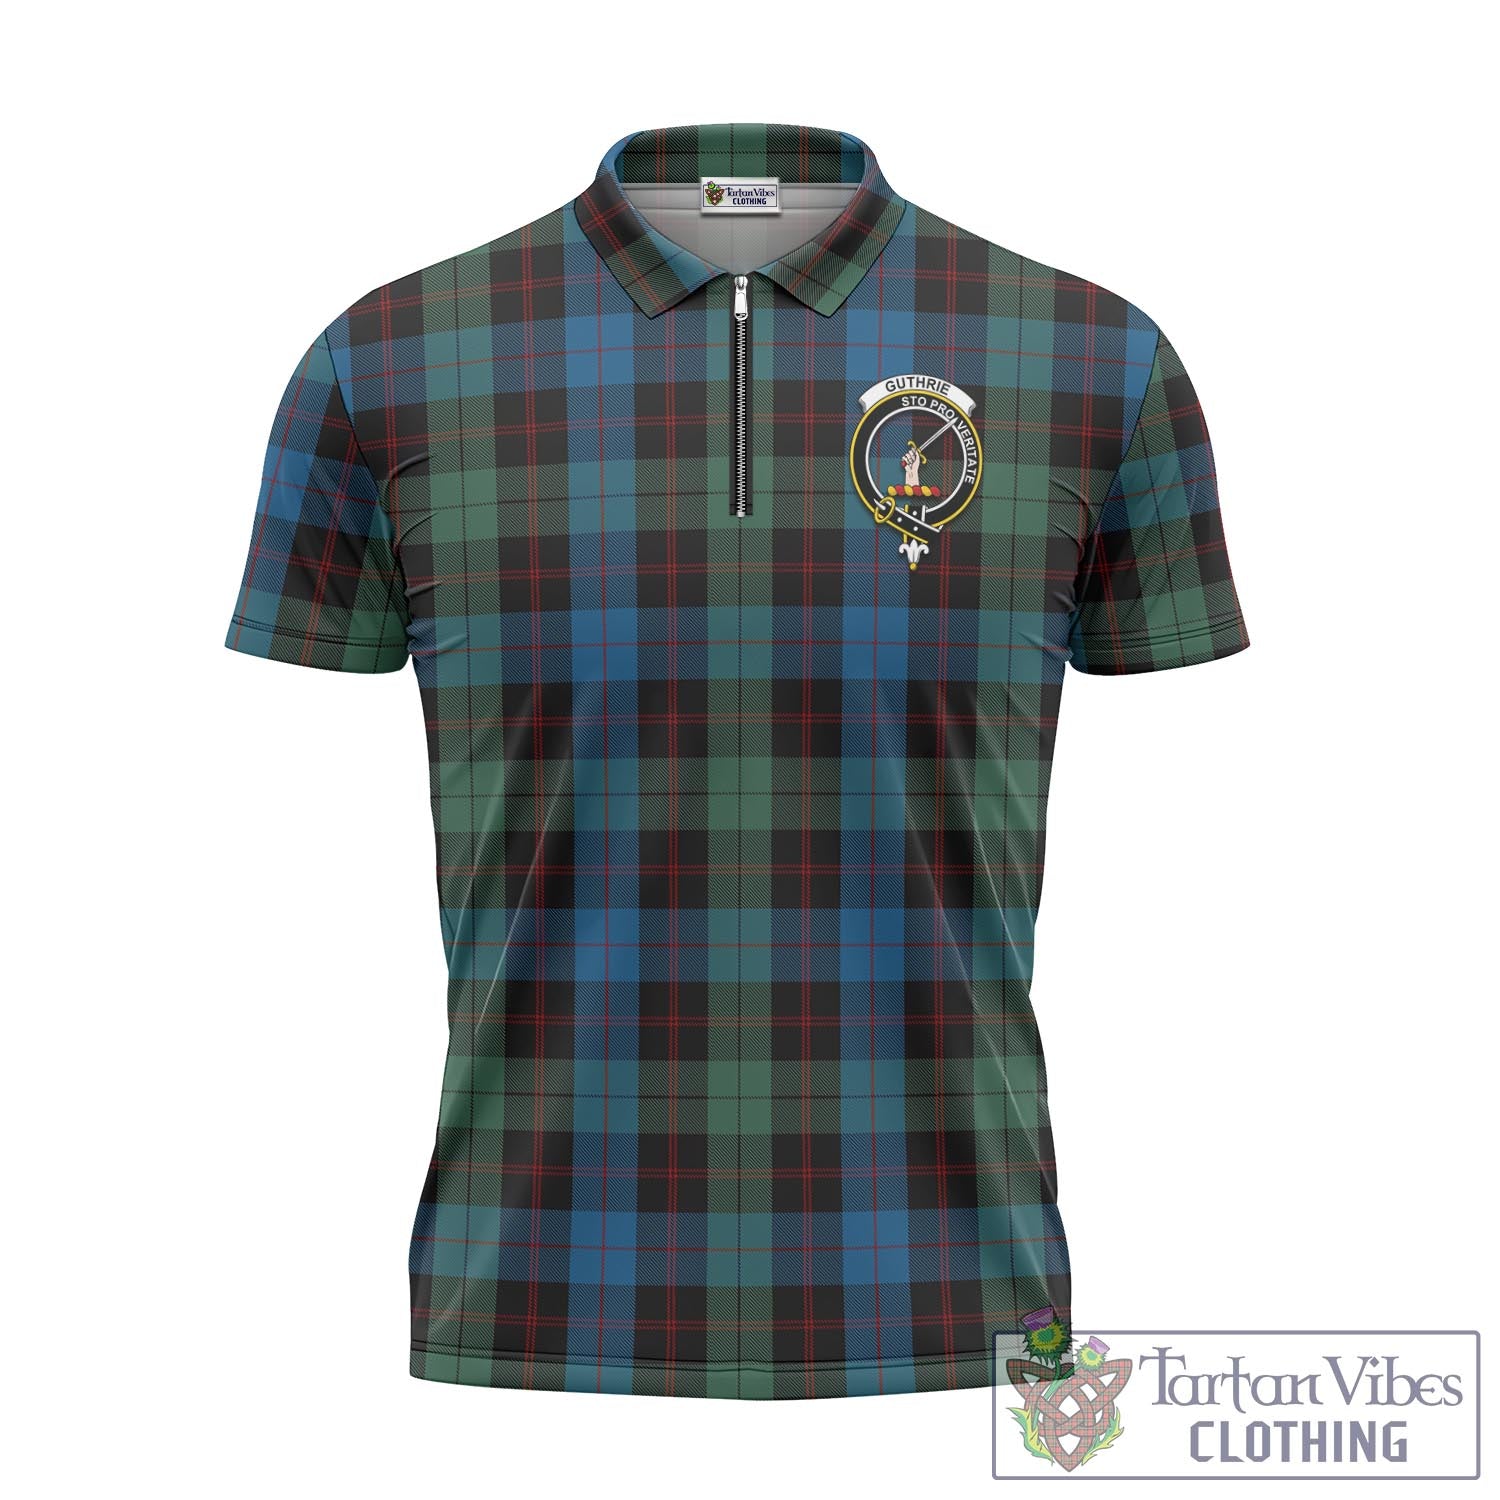 Tartan Vibes Clothing Guthrie Tartan Zipper Polo Shirt with Family Crest